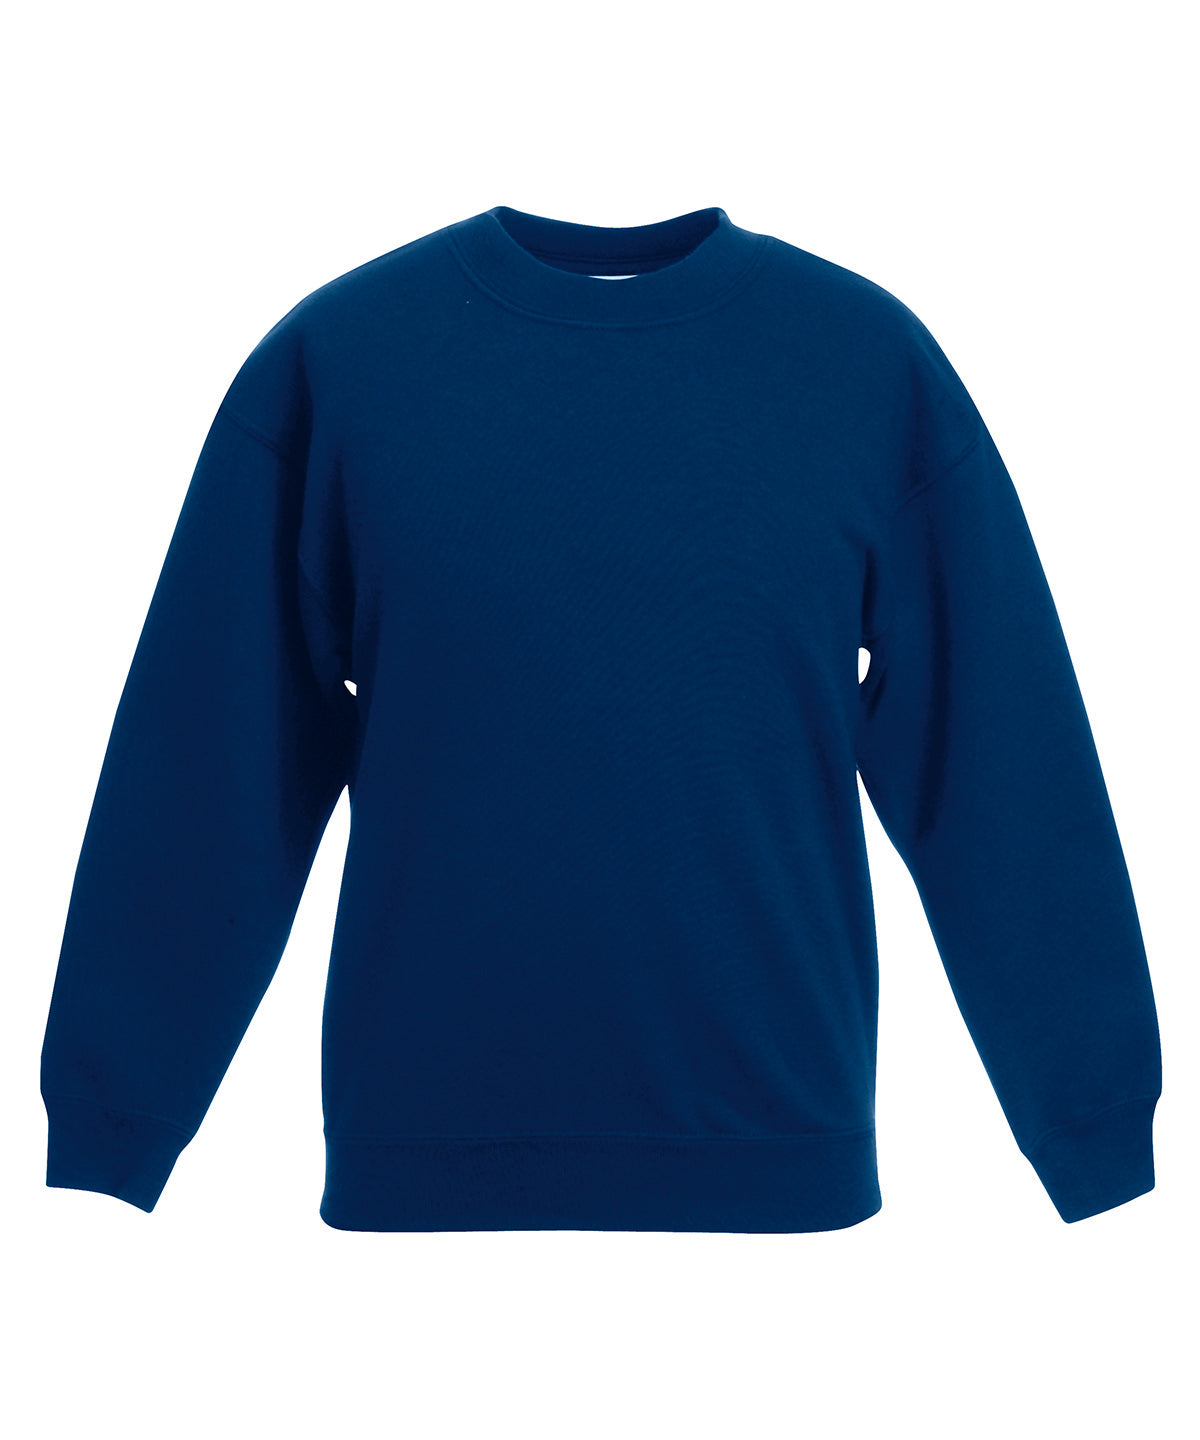 Háskólapeysur - Kids Premium Set-in Sweatshirt